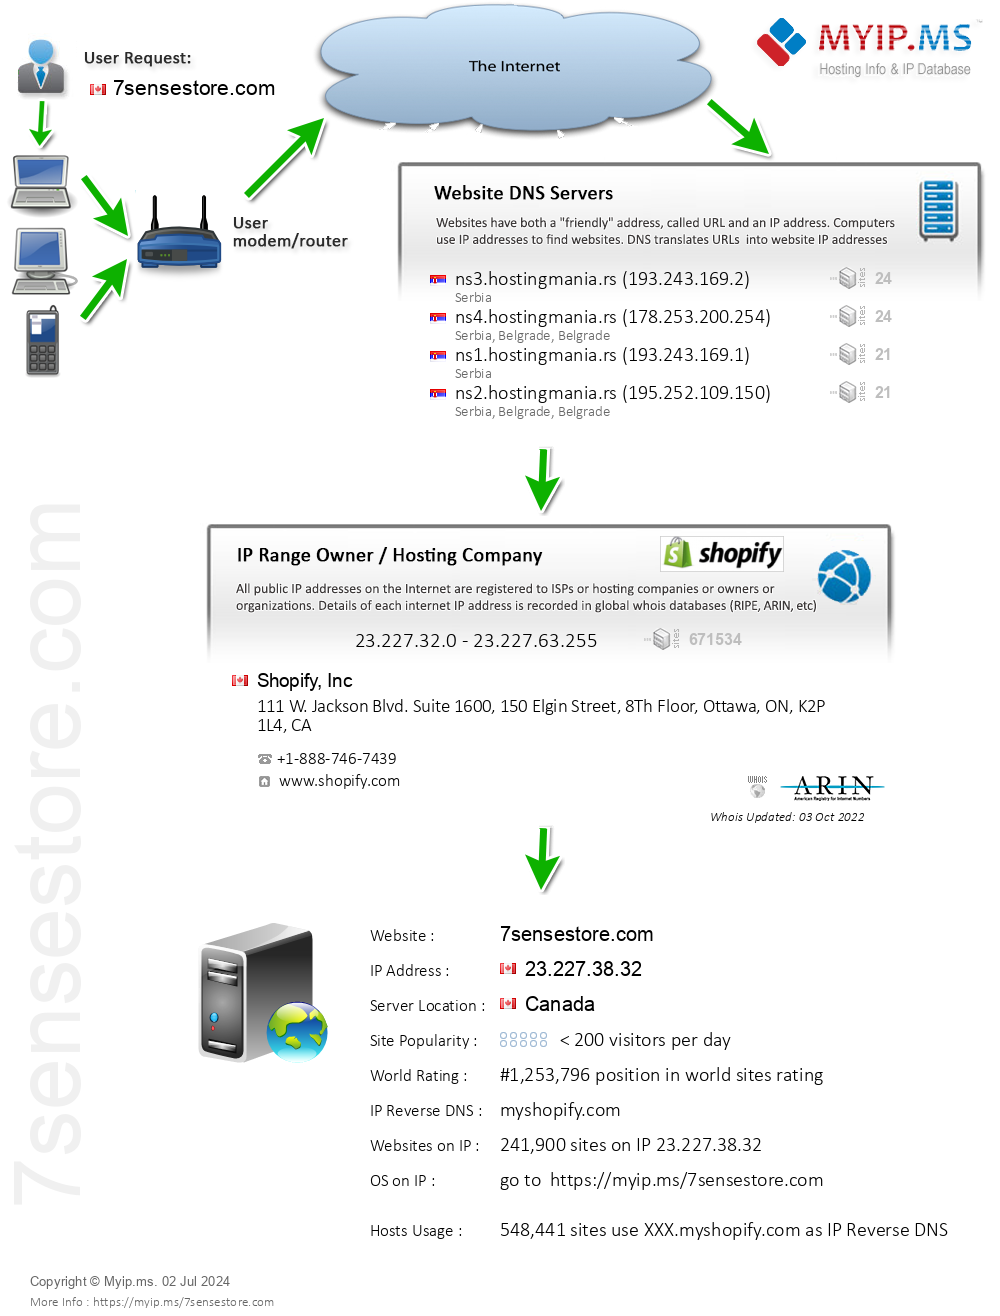 7sensestore.com - Website Hosting Visual IP Diagram